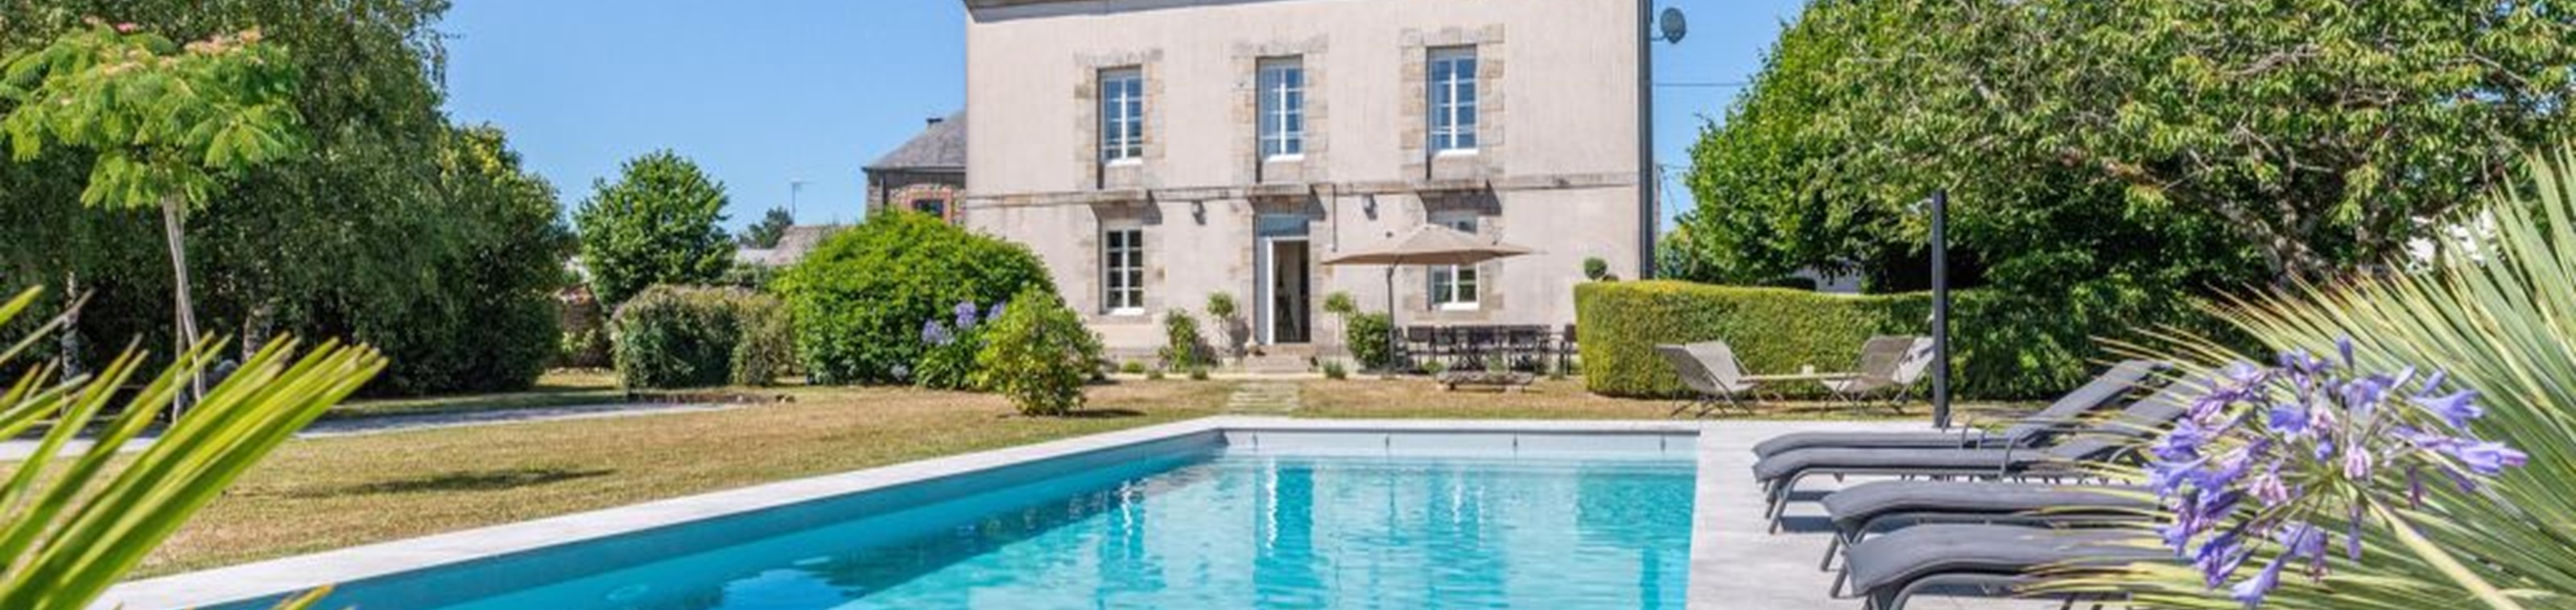 Vakantiehuis in Bretagne:  La Maison des Frères